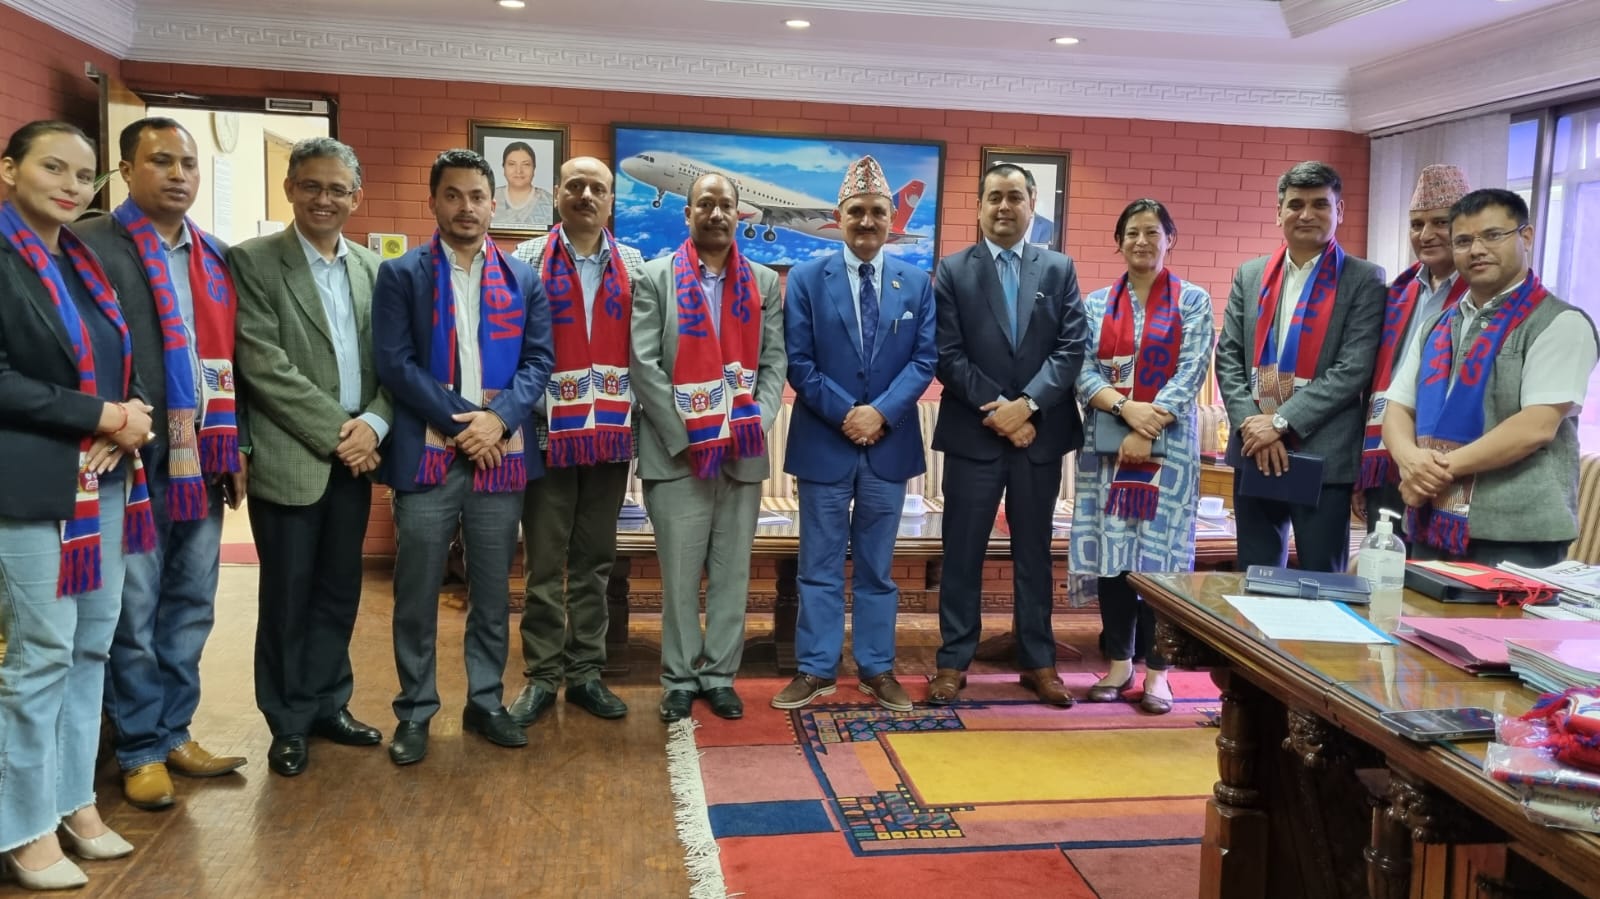 nepal association of travel agents (nata)